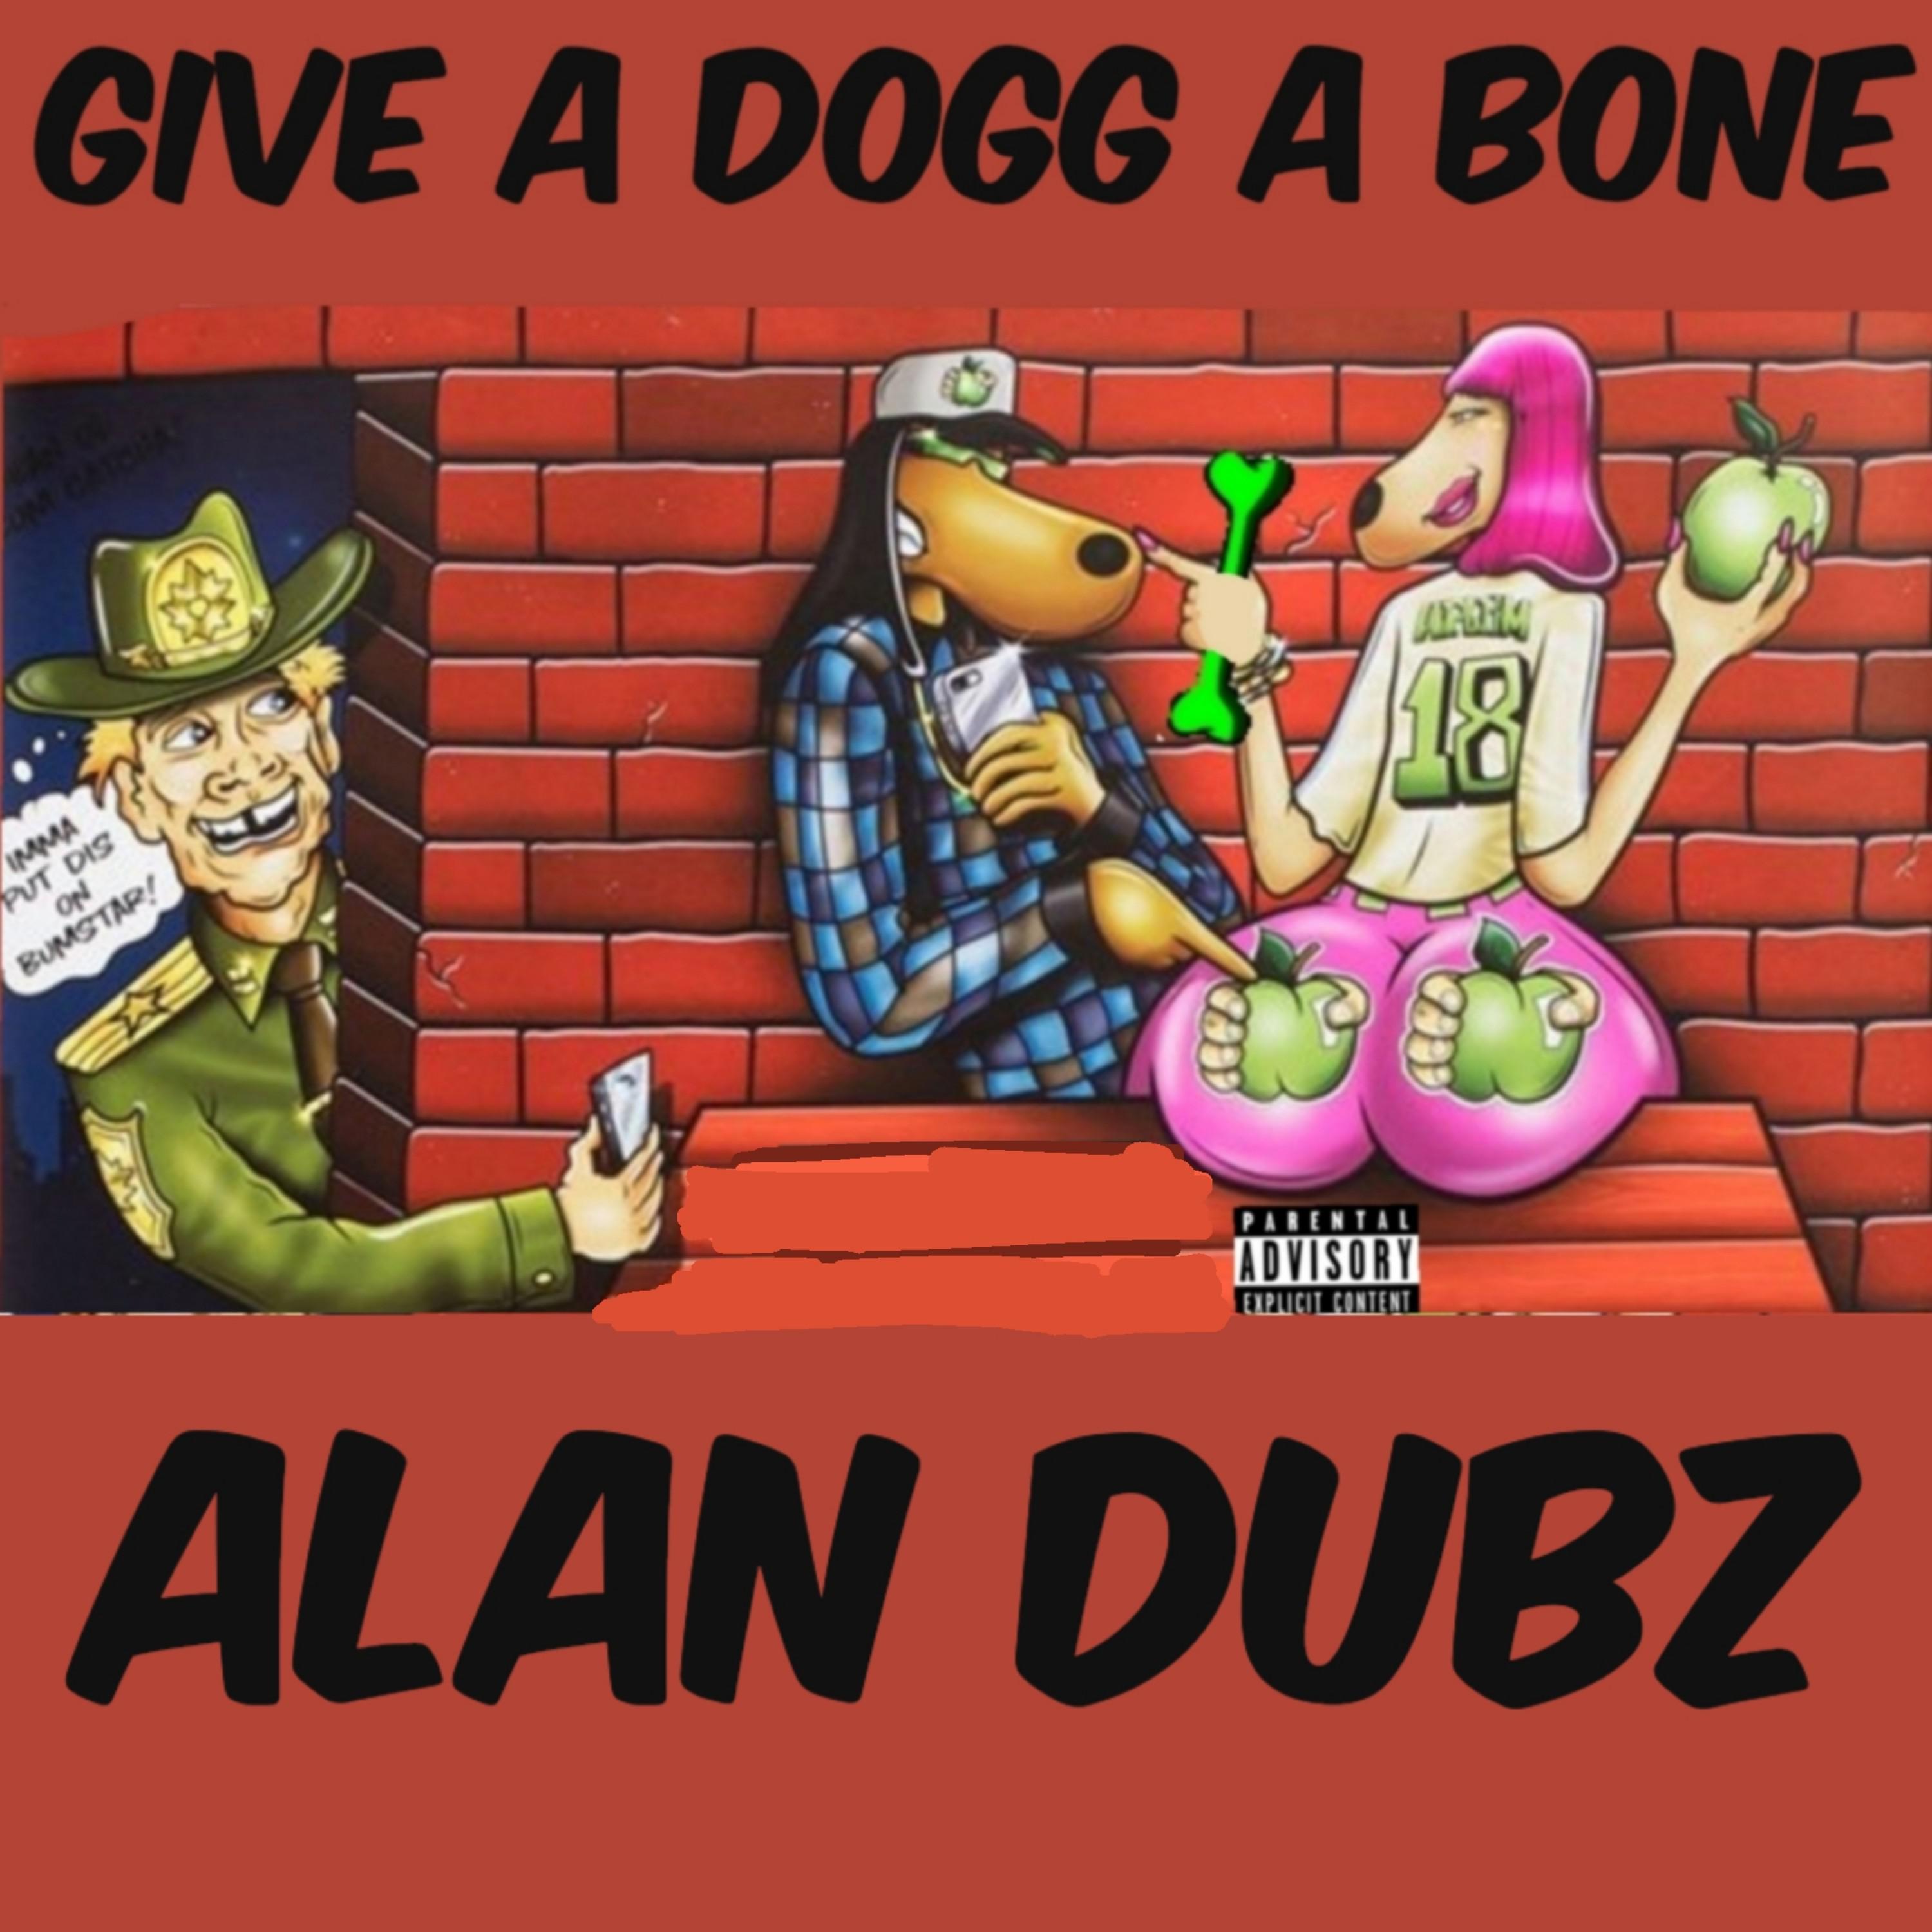 Alan Dubz - Give a Dogg a bone